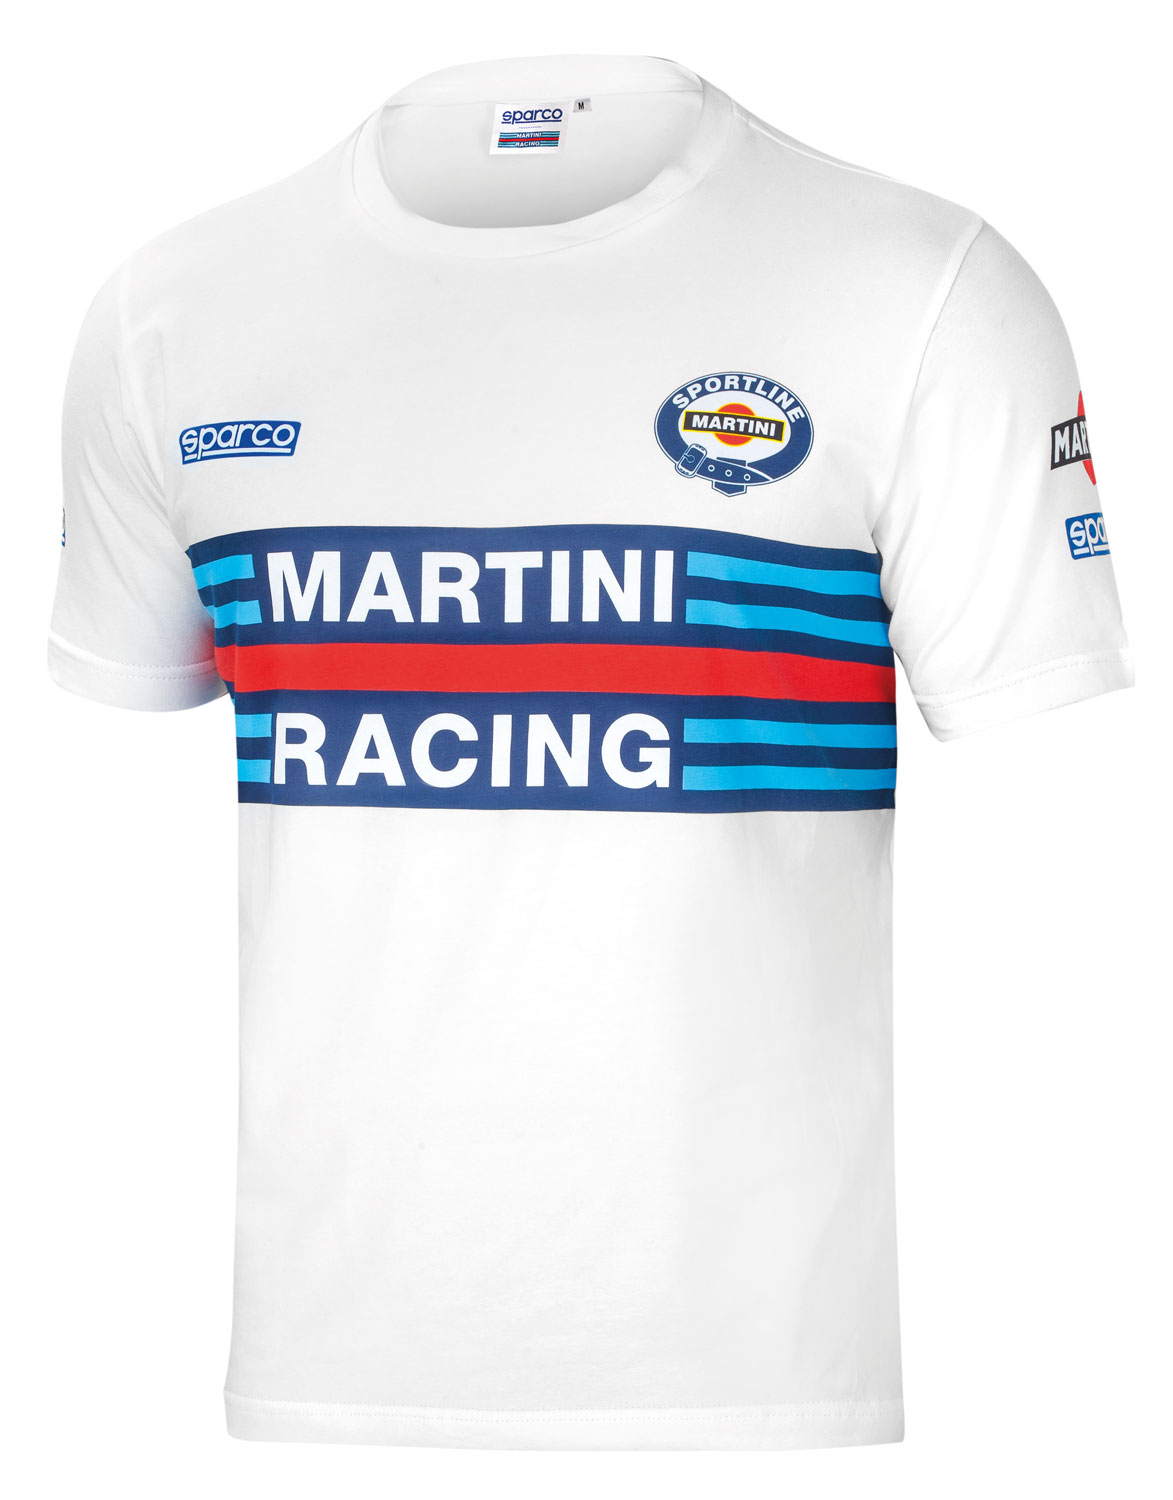 Sparco T-Shirt Martini Racing, weiß